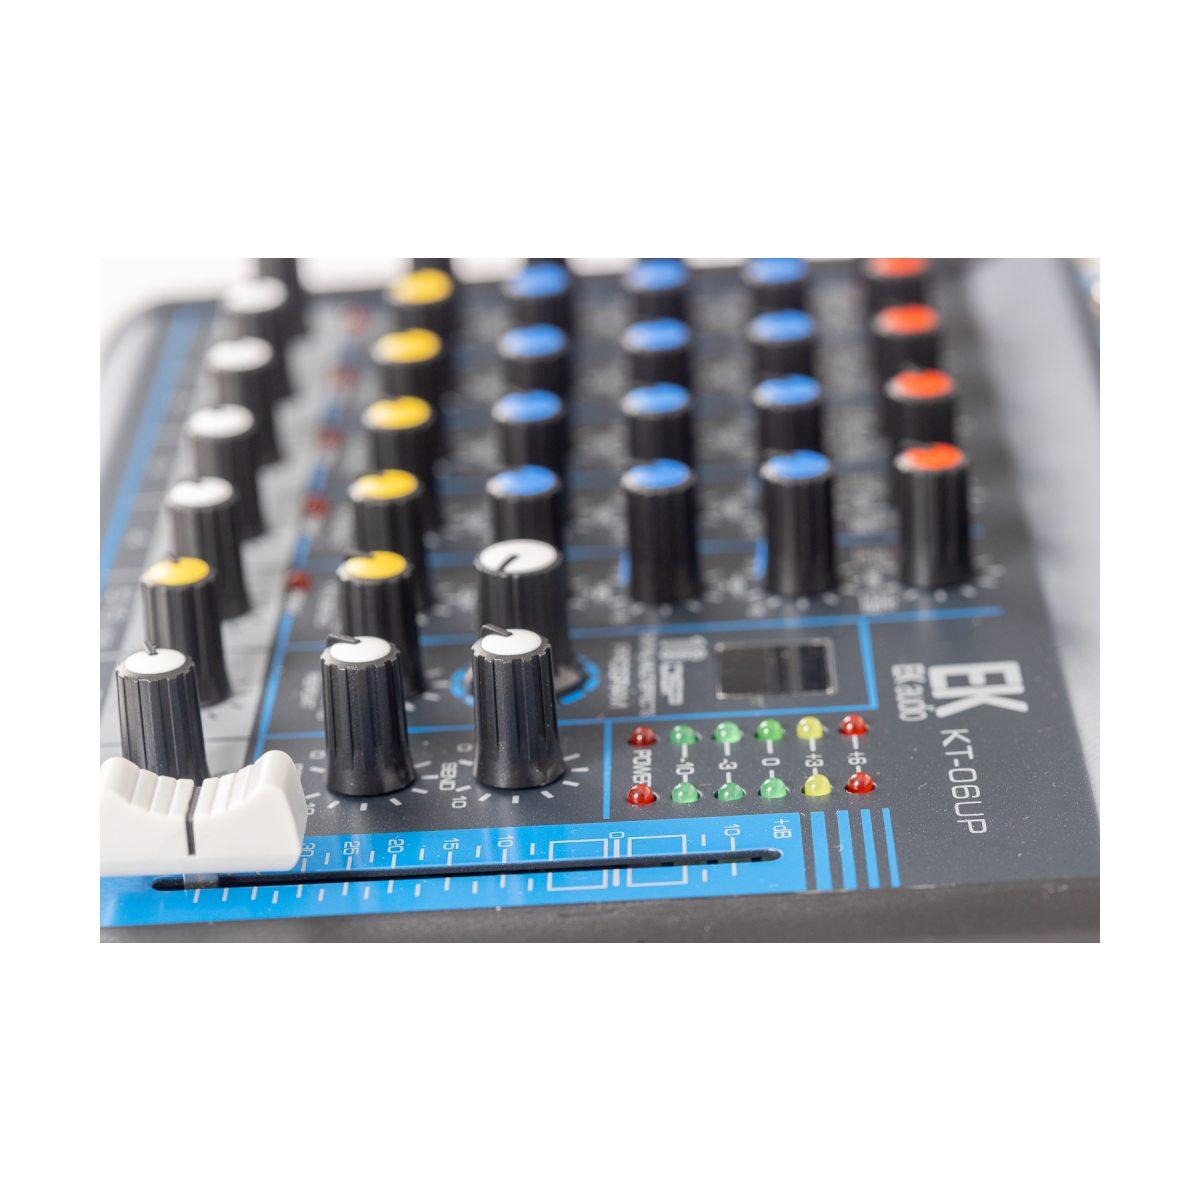 EK Audio KT06UP Mixer 6 canali